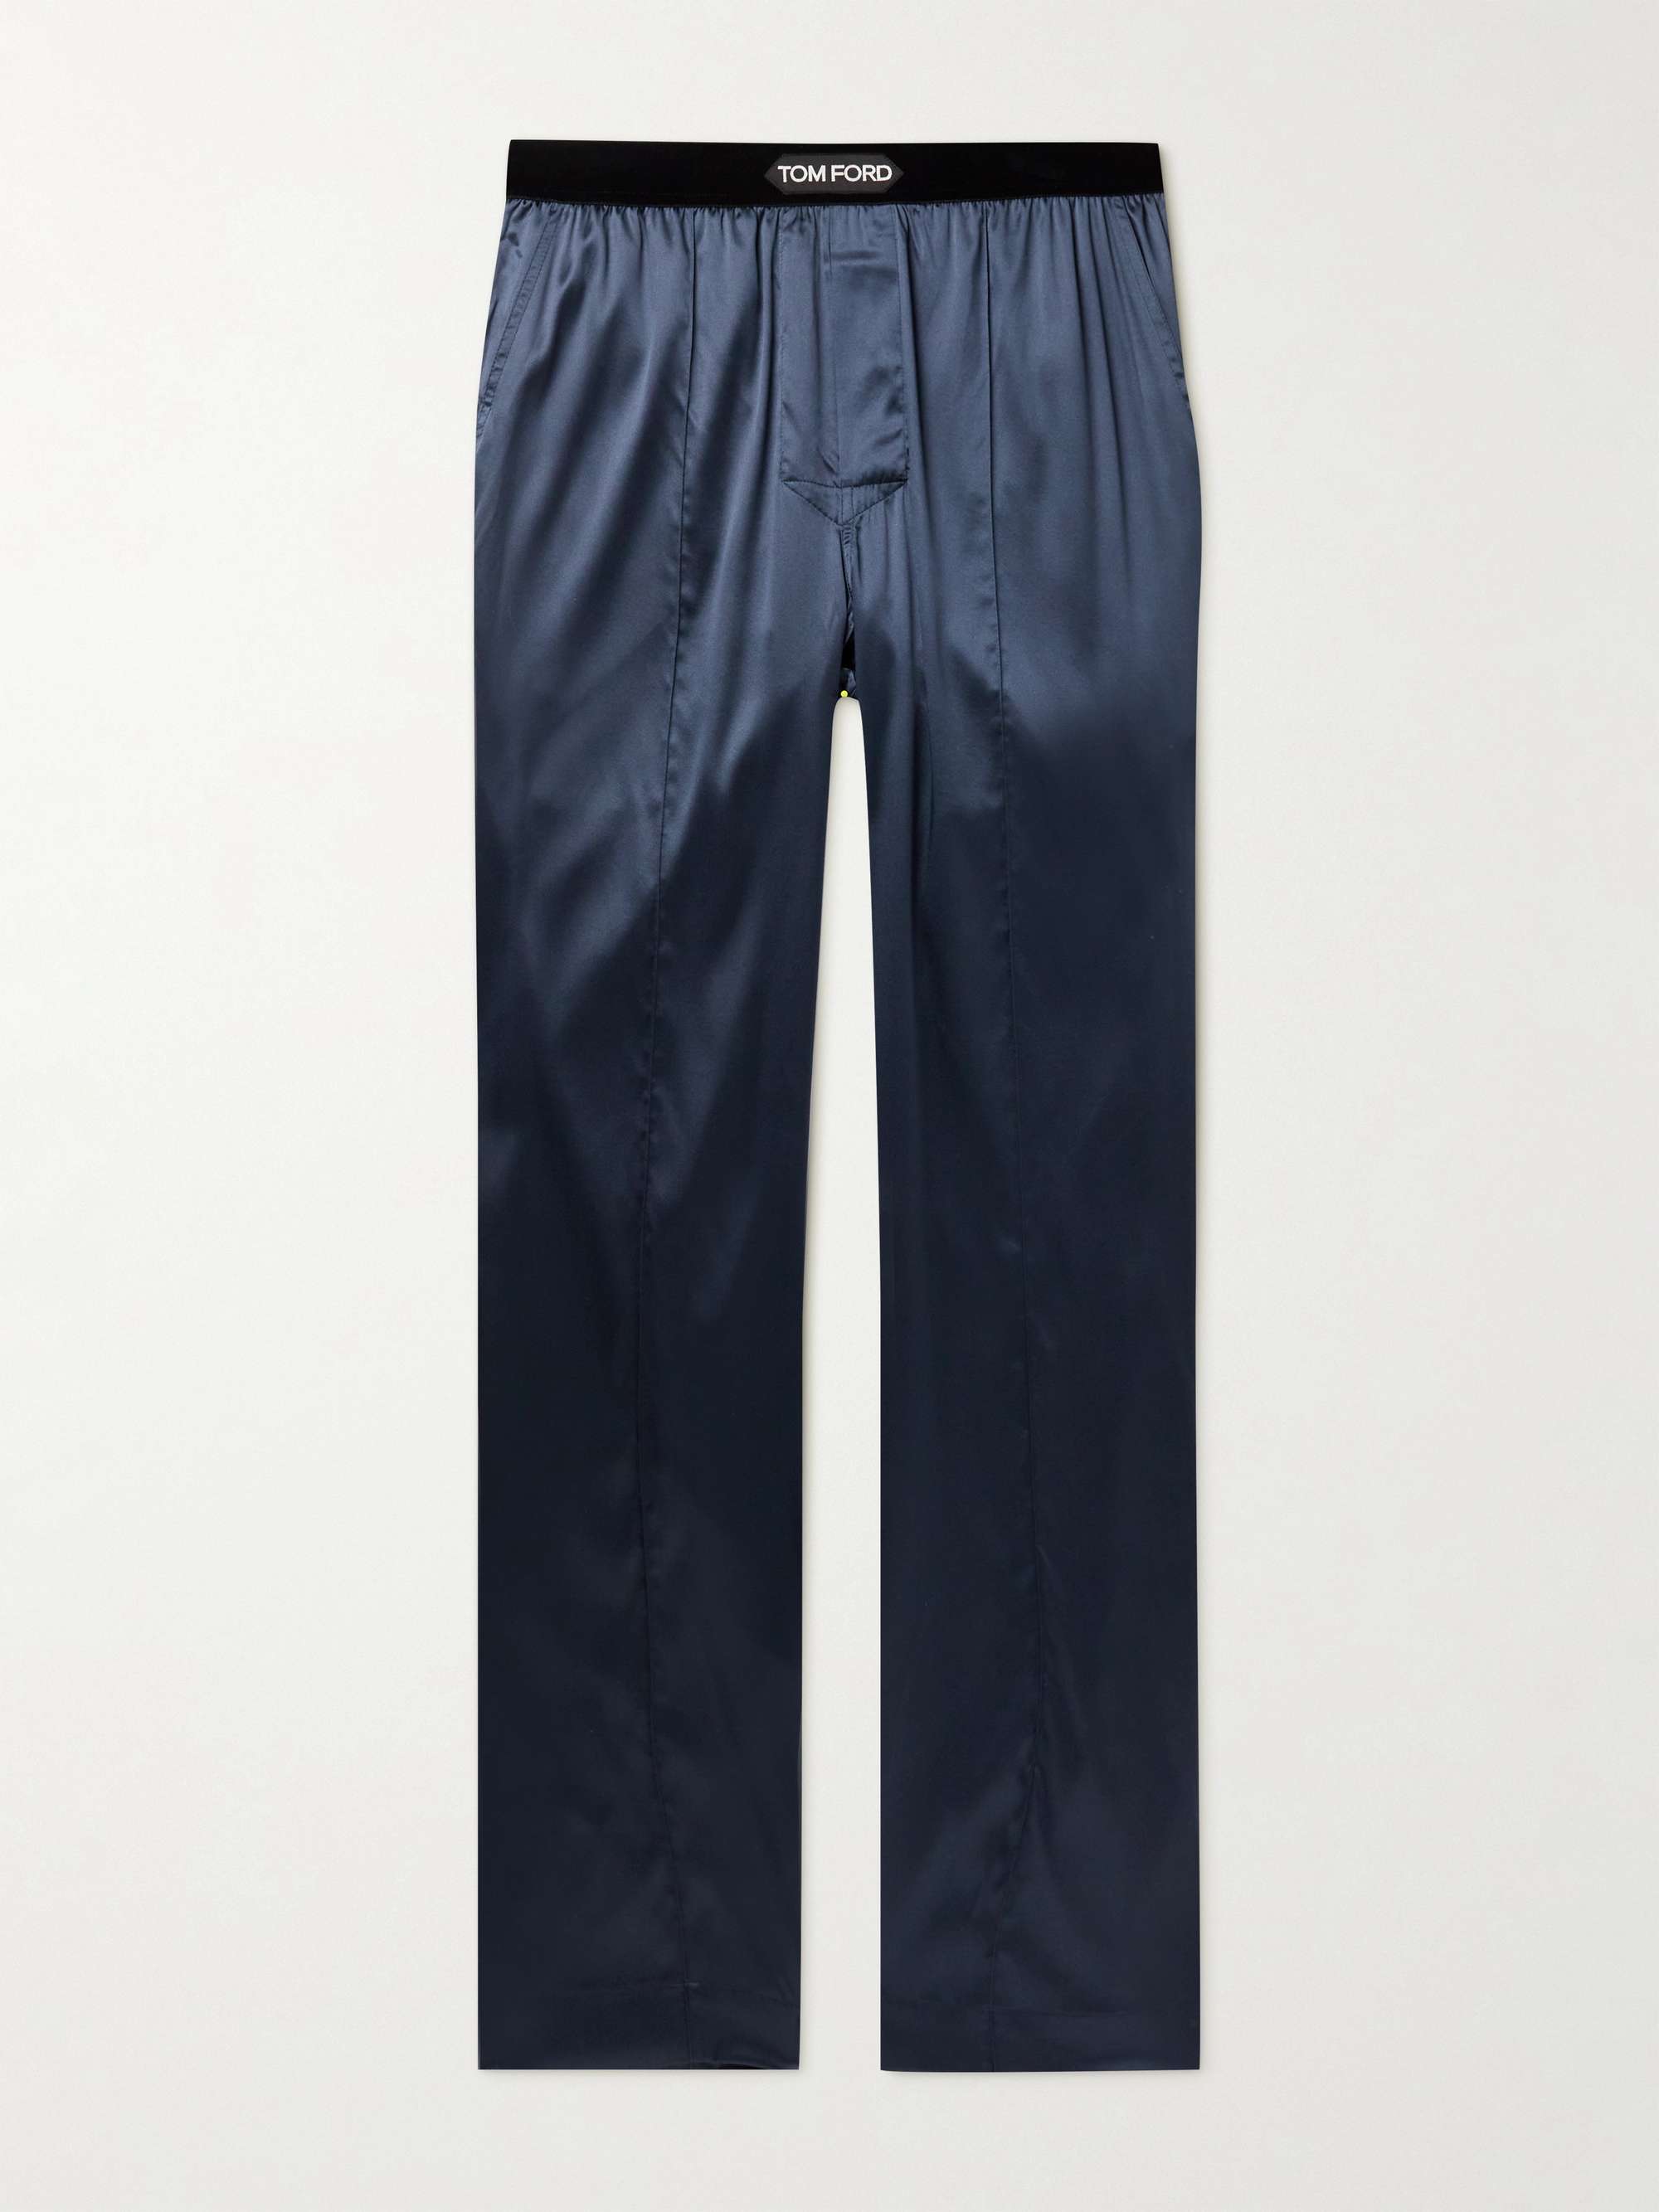 Tom Ford Velvet-trimmed Stretch-silk Satin Pyjama Trousers in Blue for Men Mens Clothing Nightwear and sleepwear 